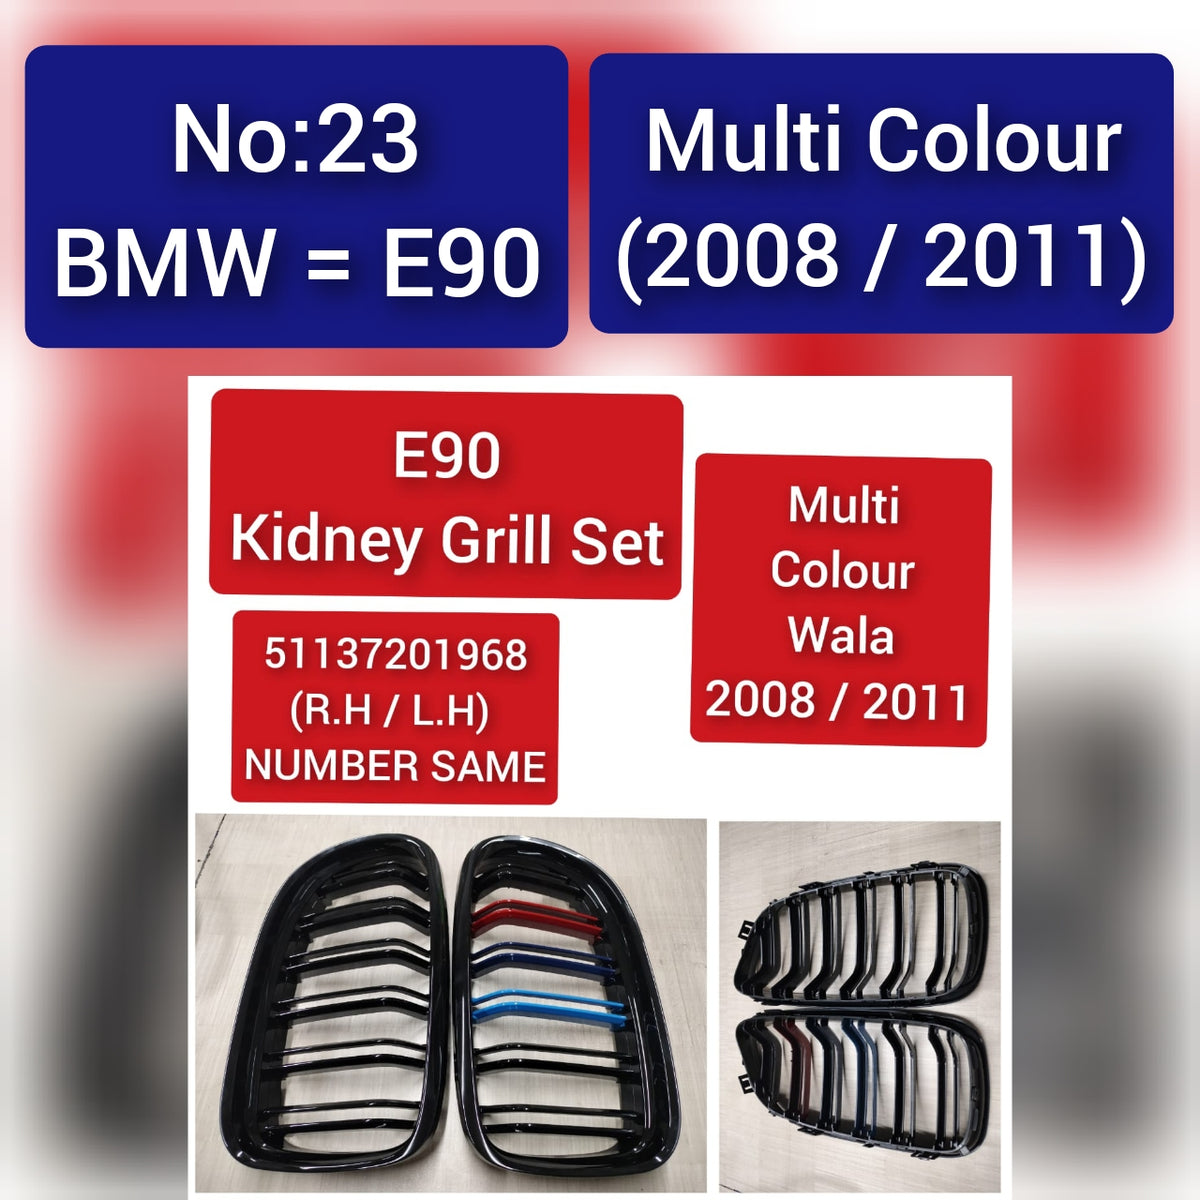 BMW = E90 Multi Colour (2008/2011)  E90 Kidney Grill Set 51137201968 (R.H/L.H) NUMBER SAME Multi Colour Wala 2008/2011 Tag 23